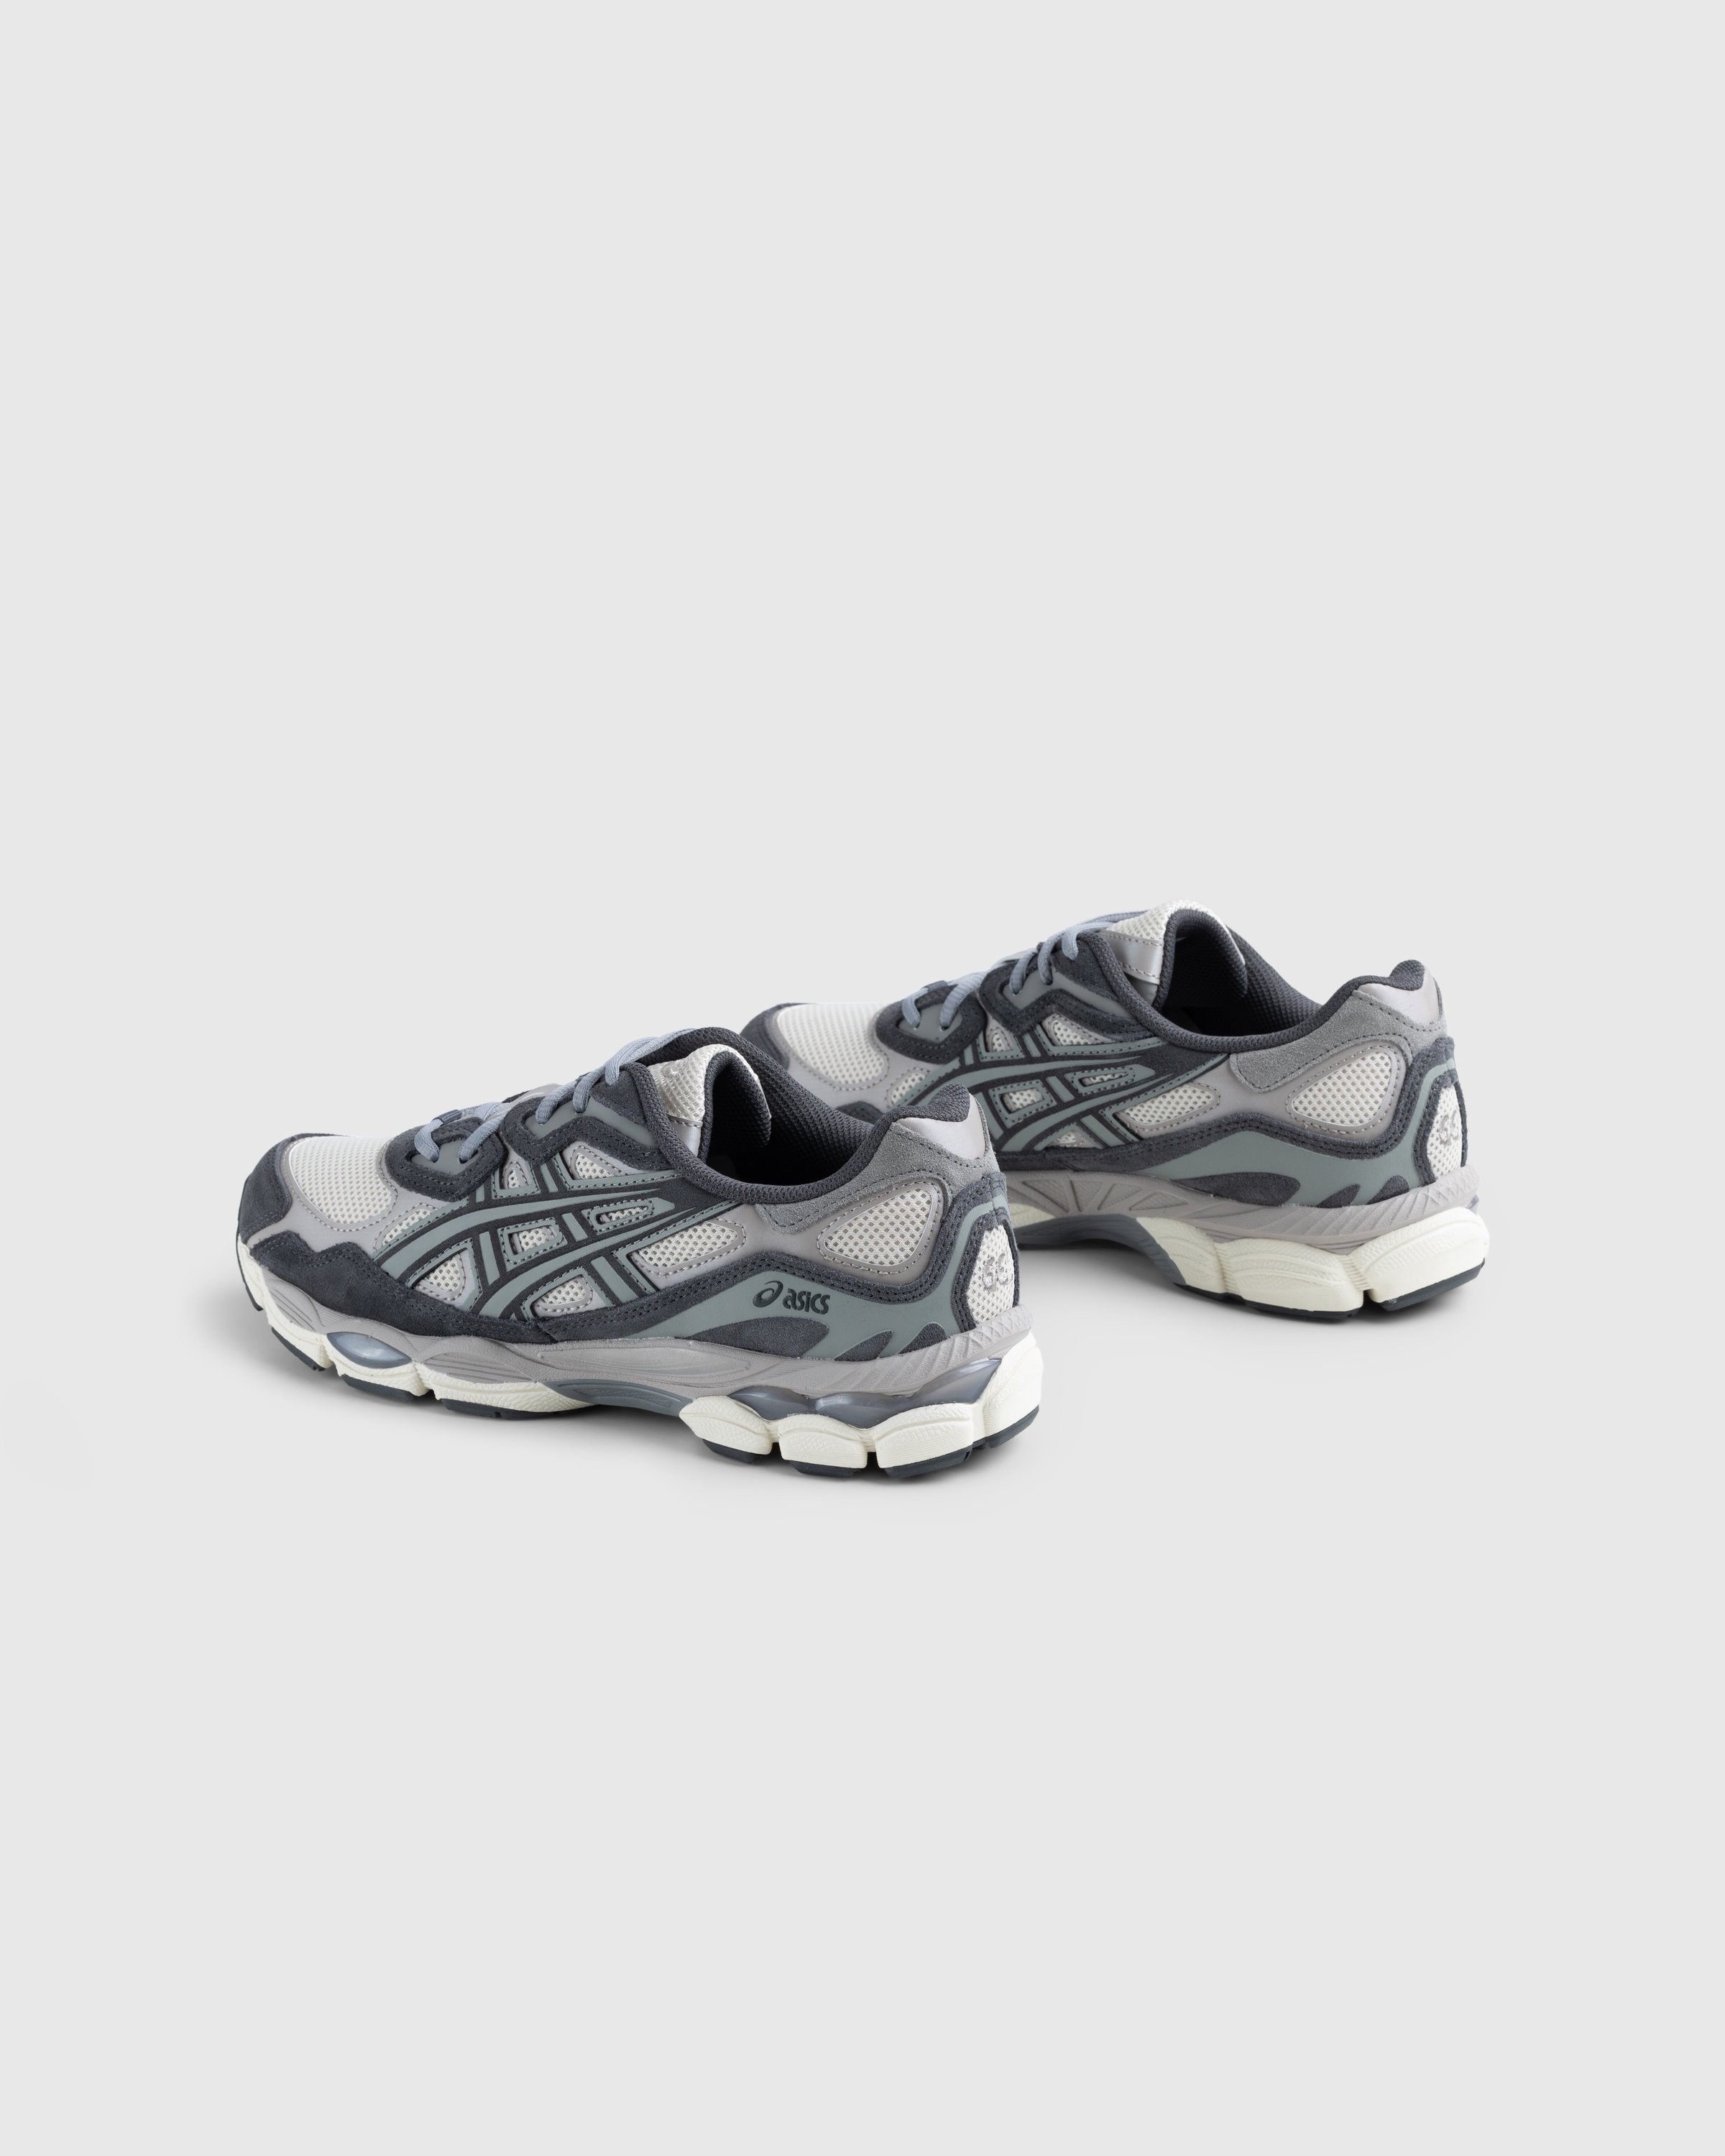 asics - GEL-NYC Oatmeal/Obsidian Grey - Footwear - Multi - Image 4